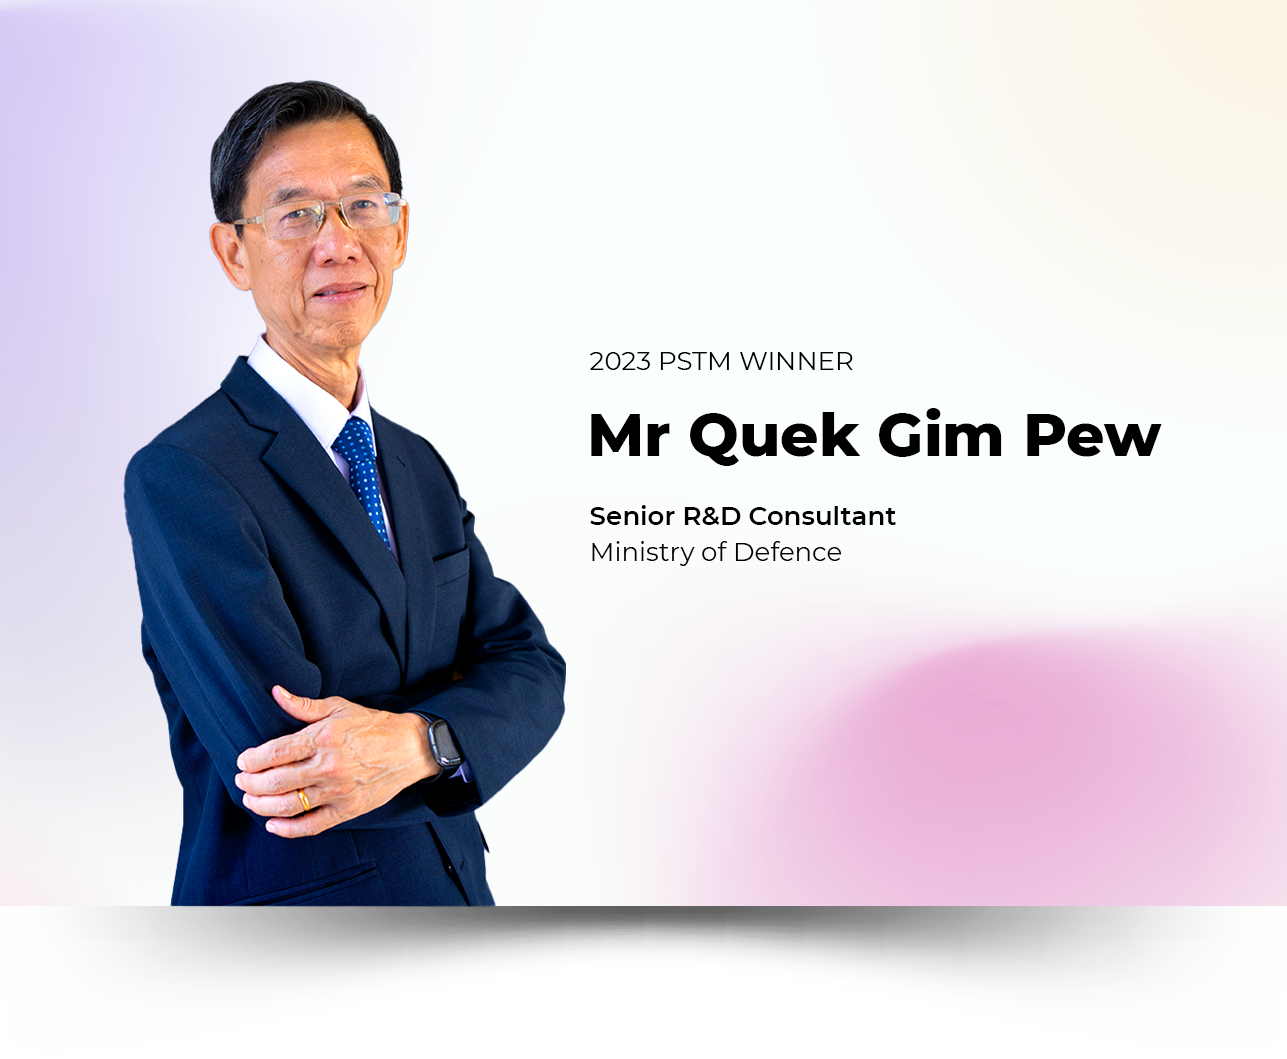 Mr Quek Gim Pew